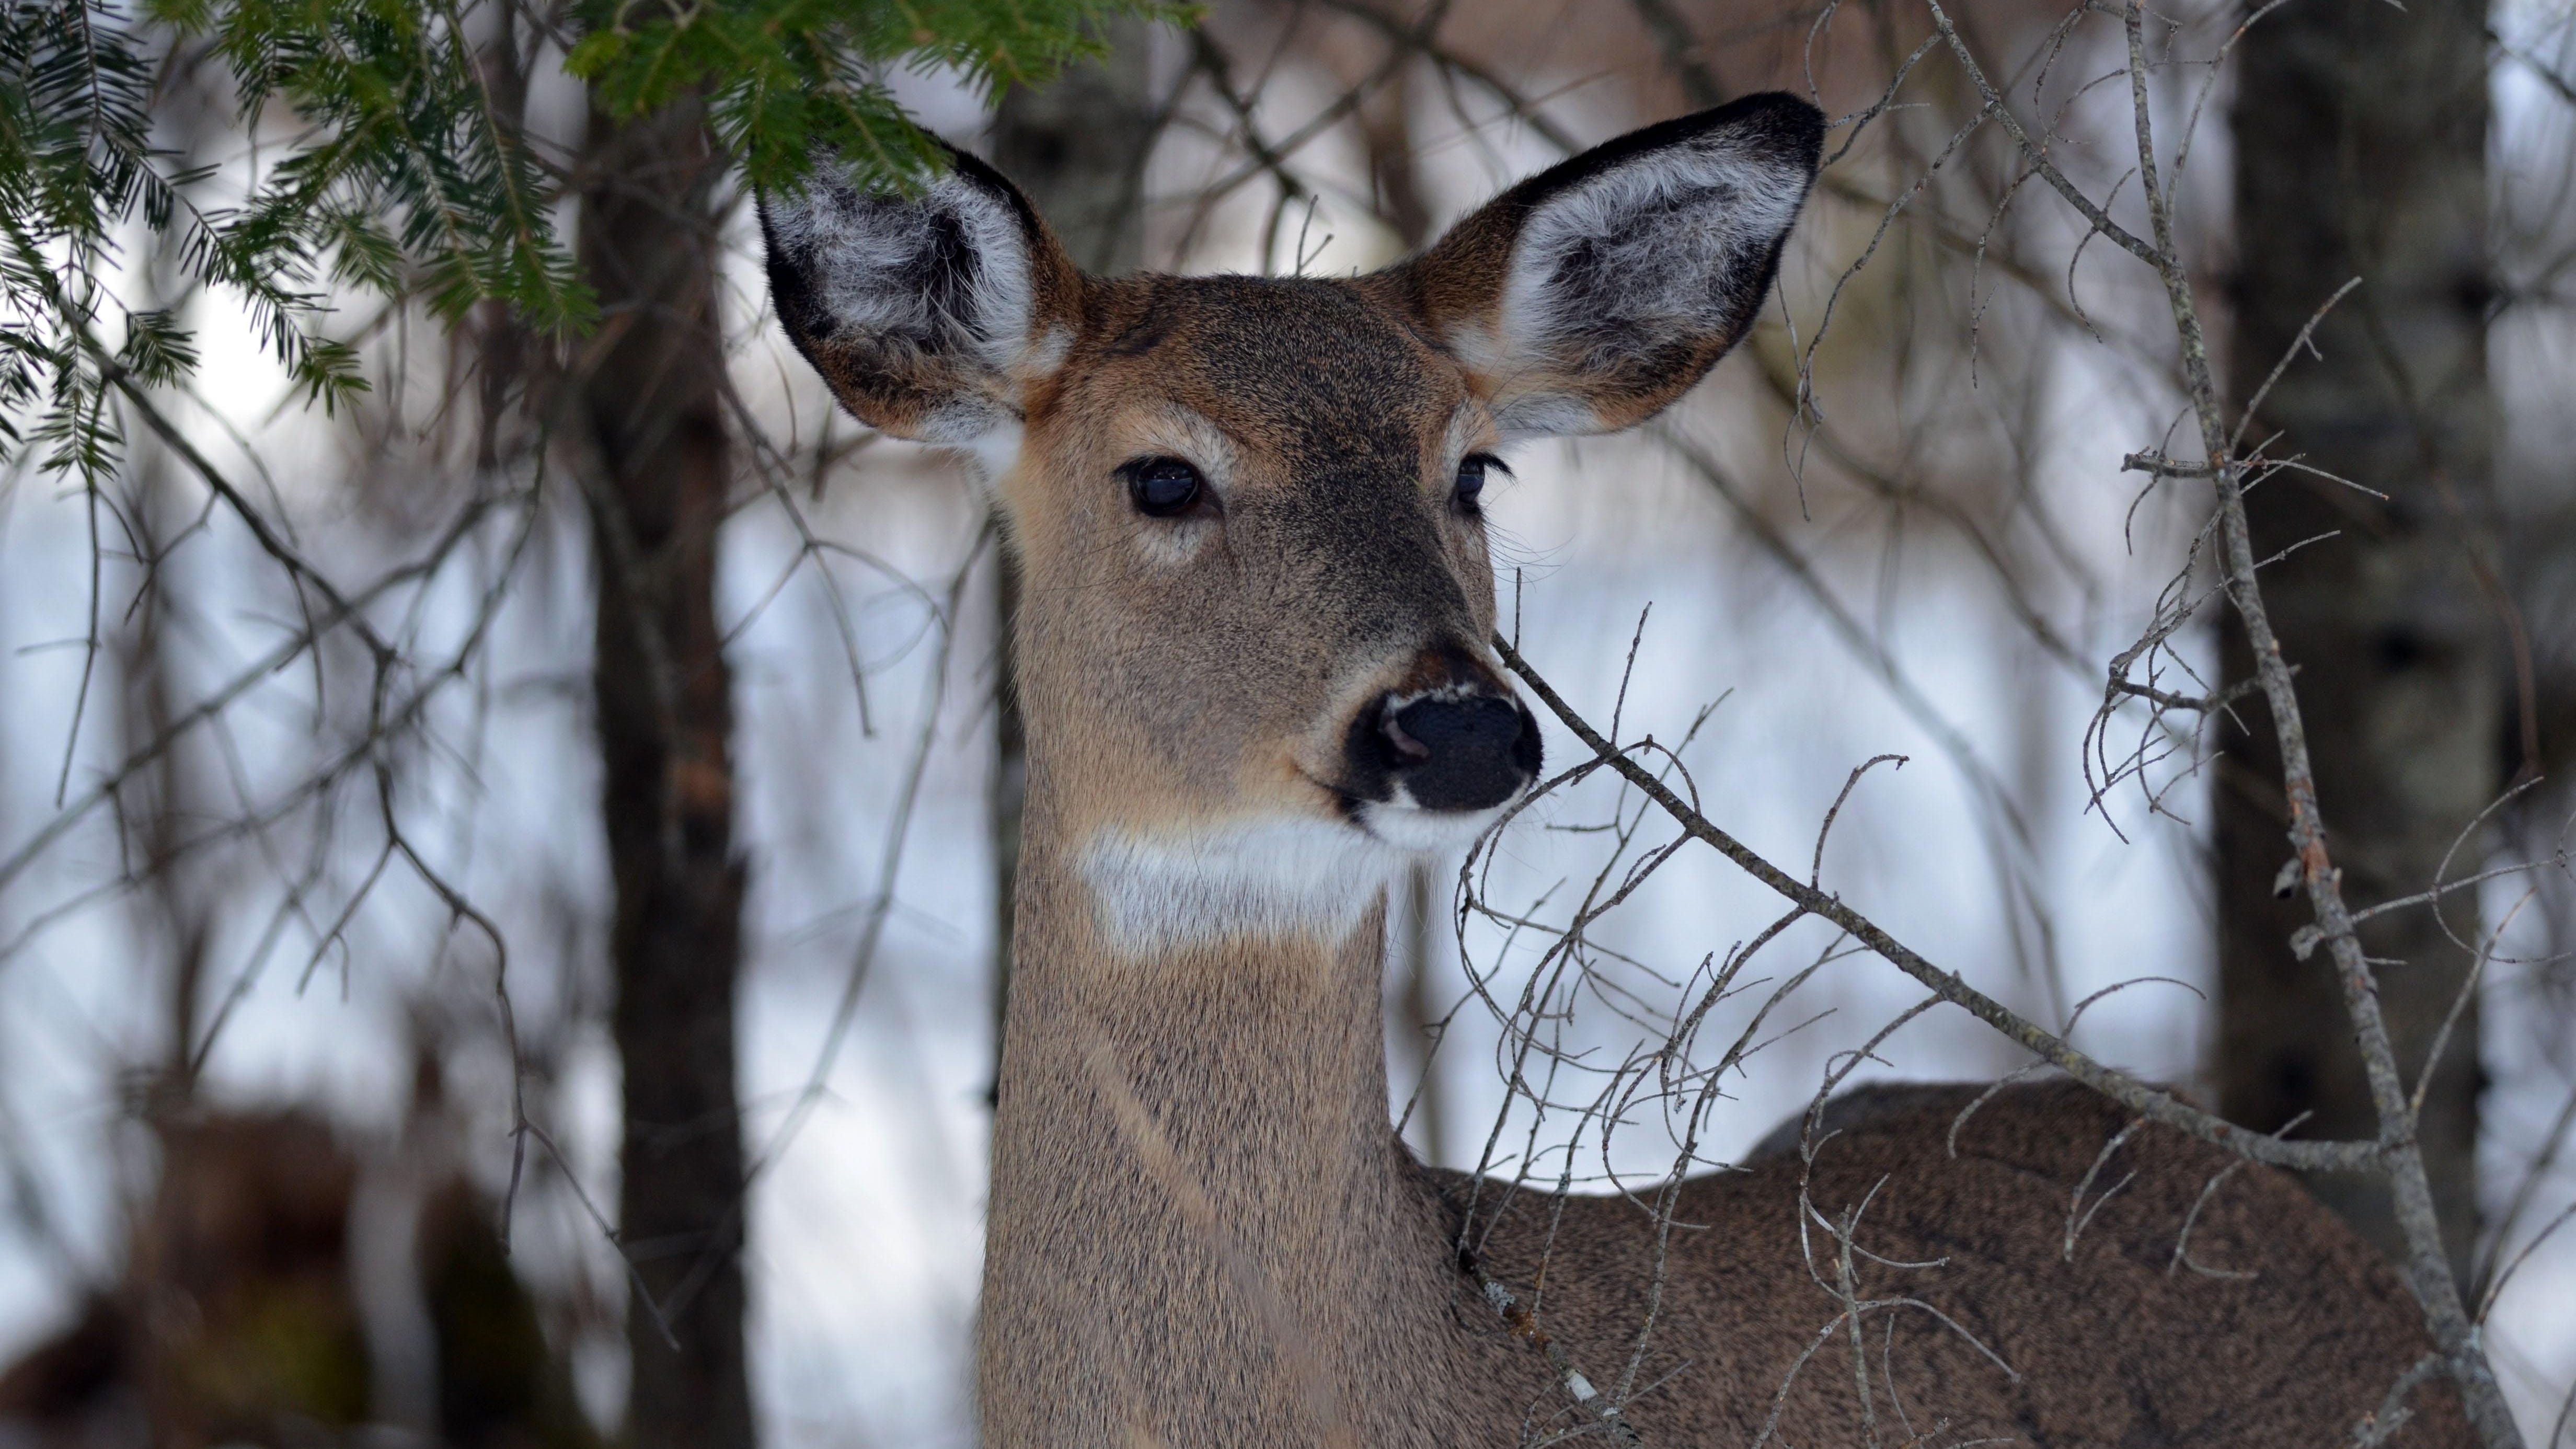 State OKs measures to stop chronic wasting disease in deer